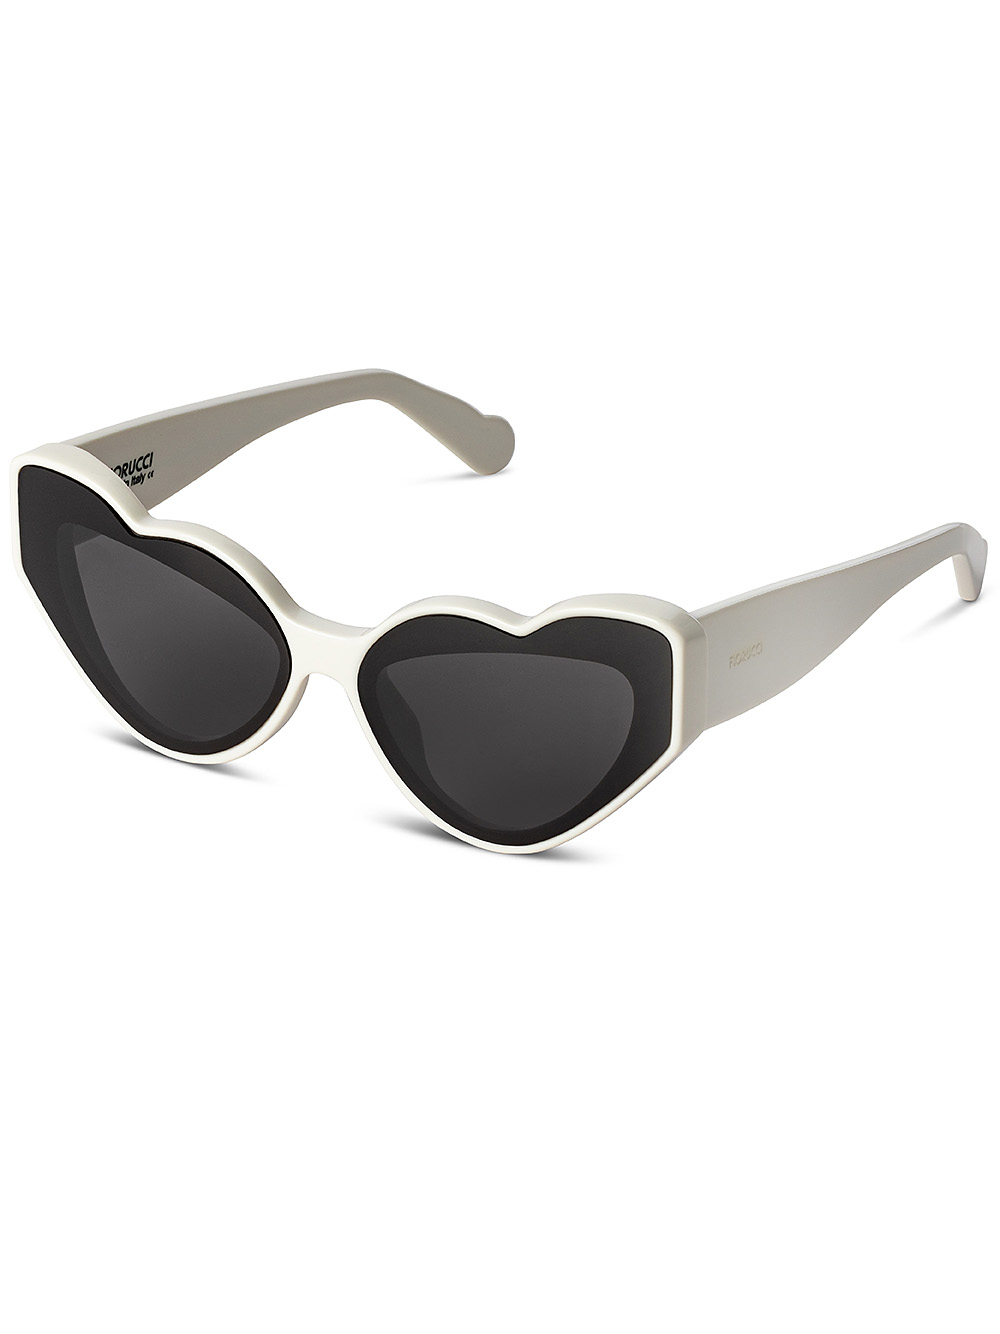 Heart-shaped Acetate Sunglasses